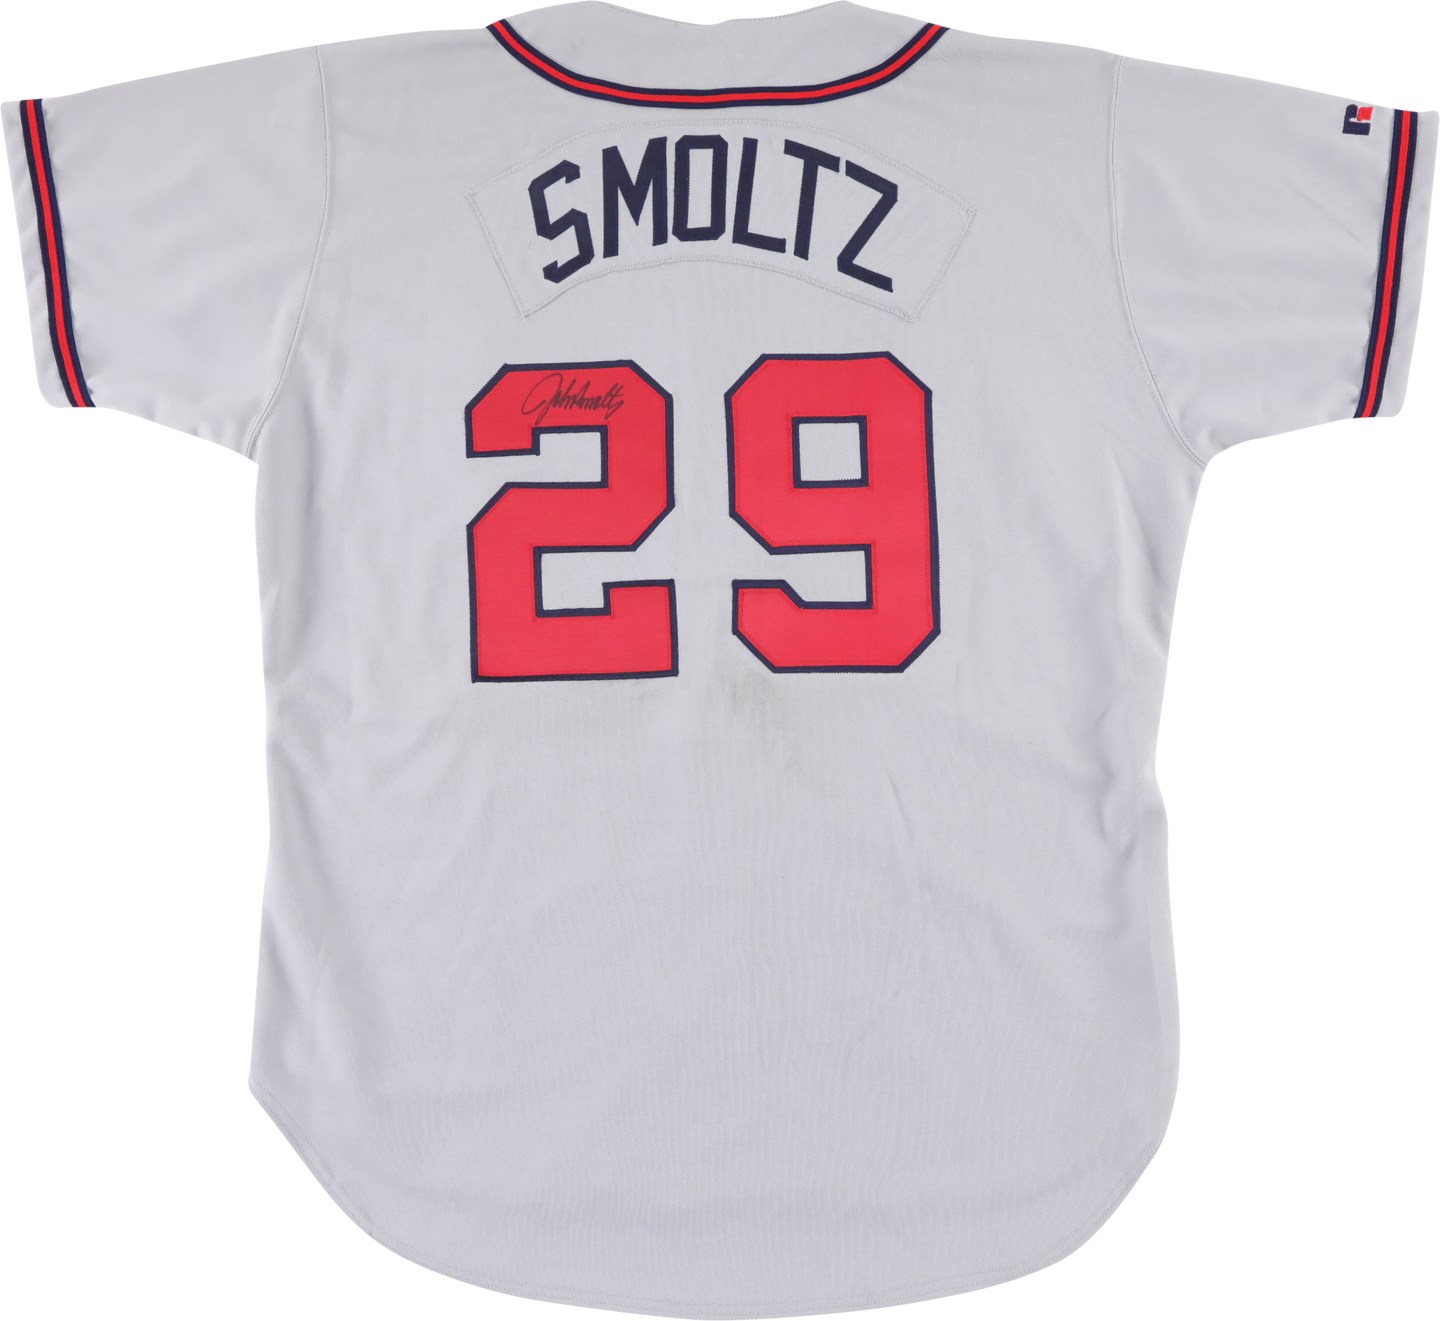 - Mid-1990s John Smoltz Atlanta Braves Signed Game Worn Jersey